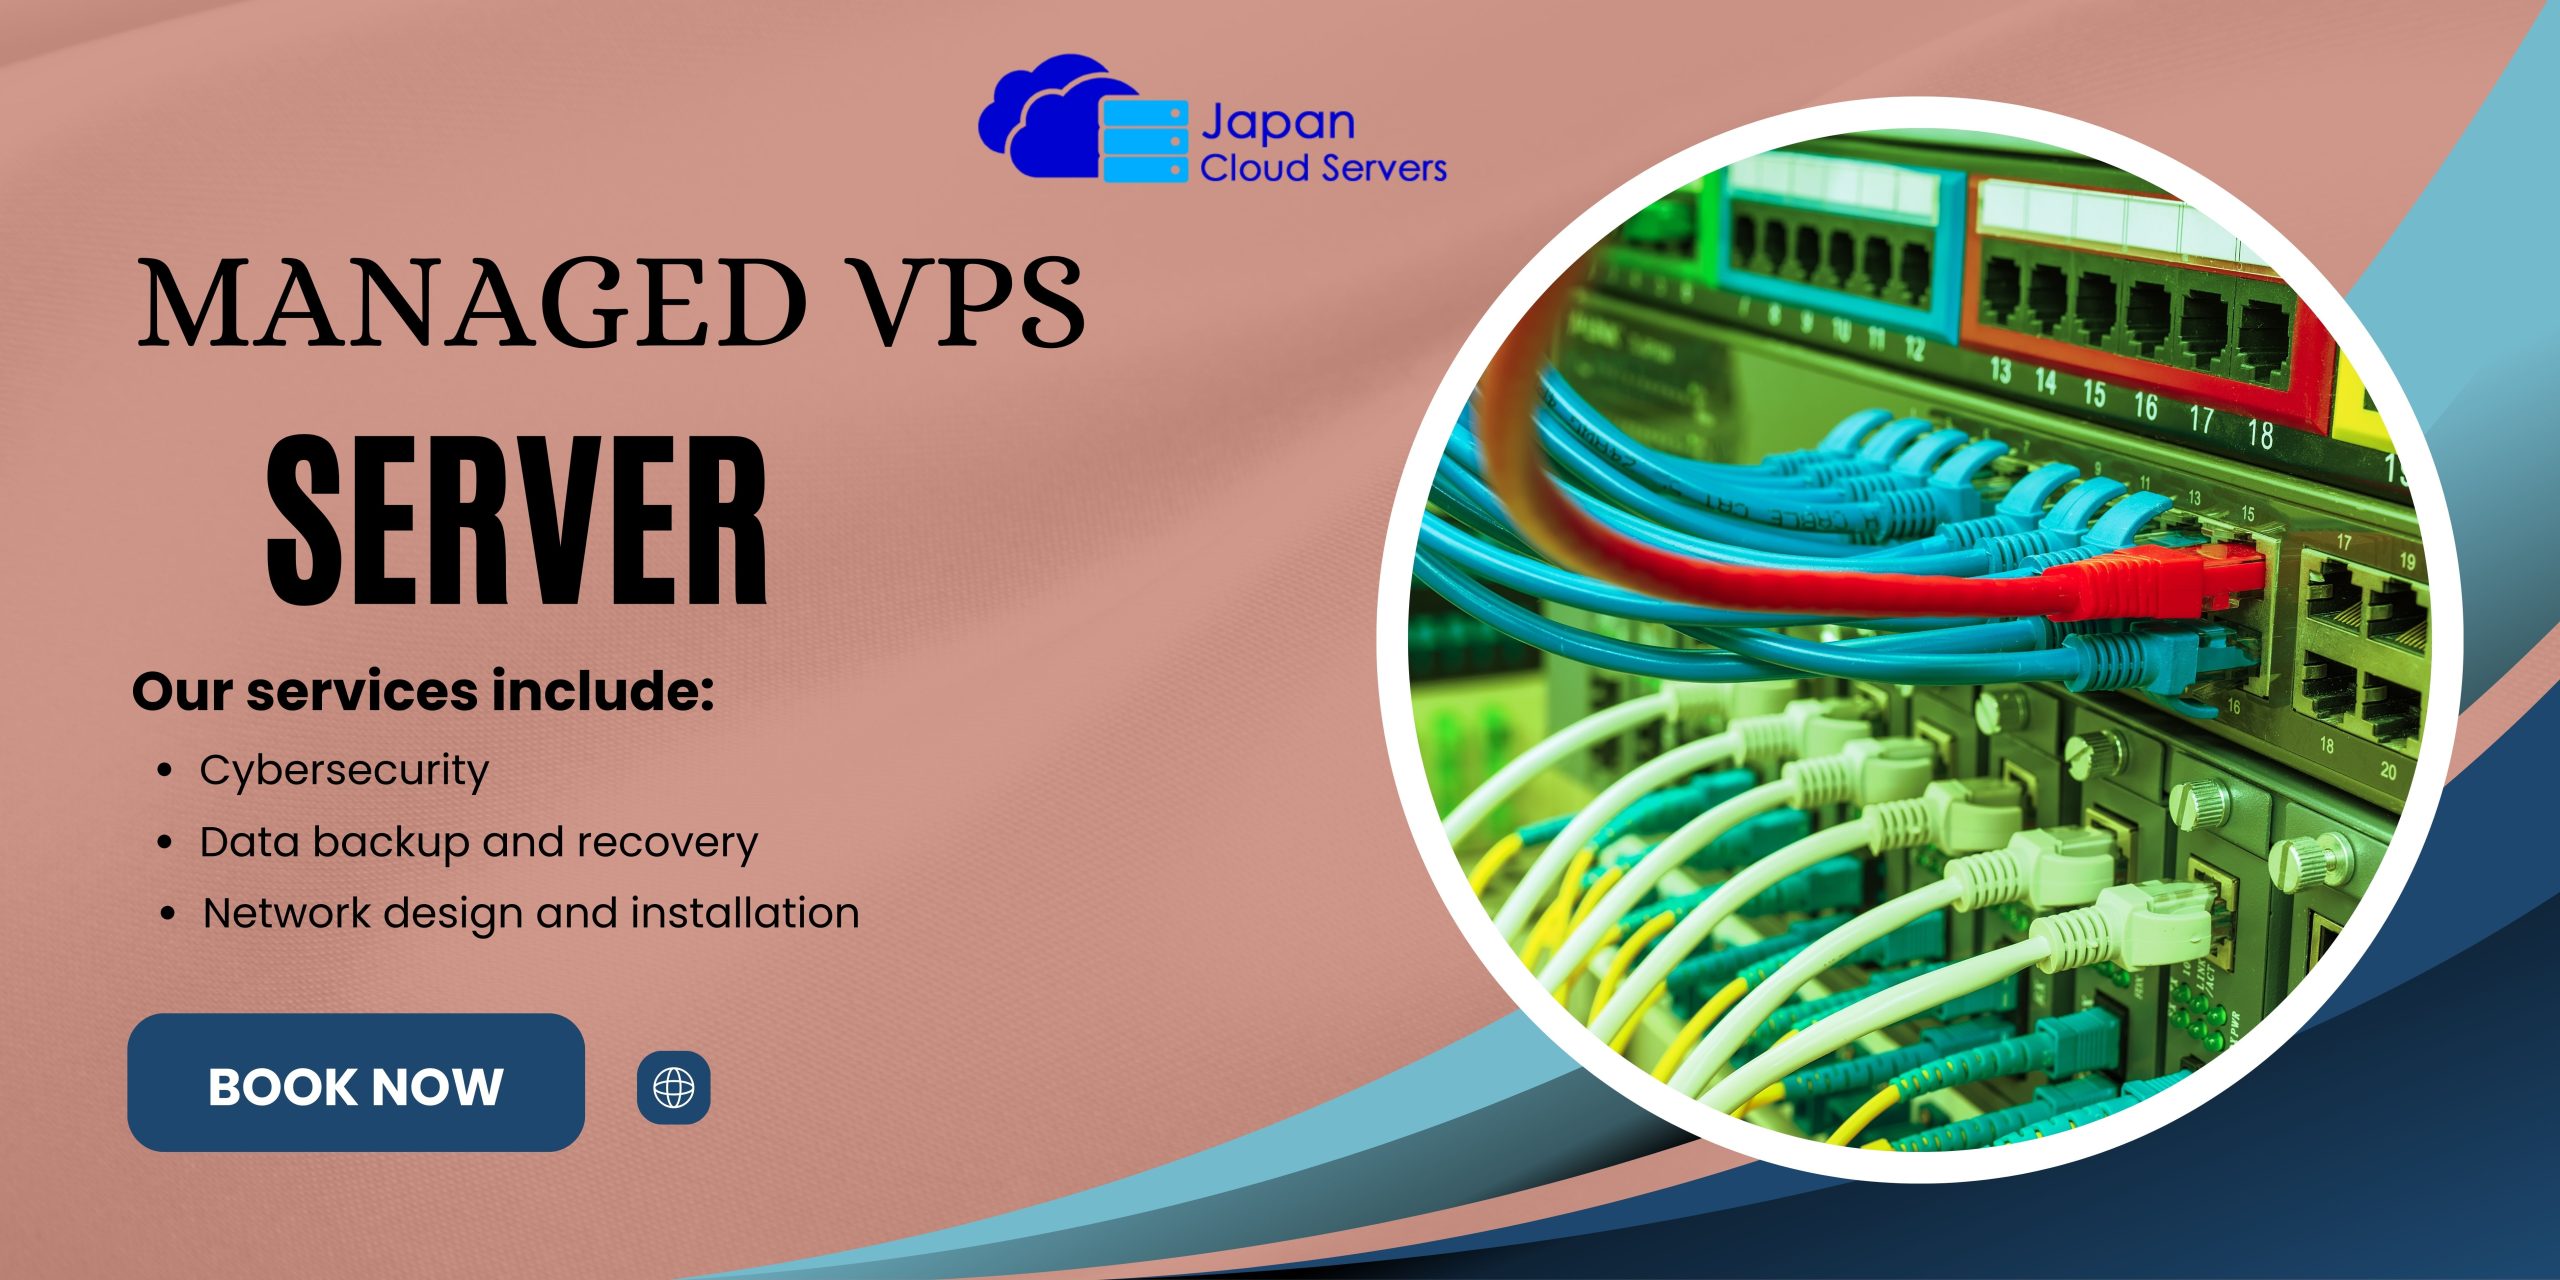 Managed VPS Server